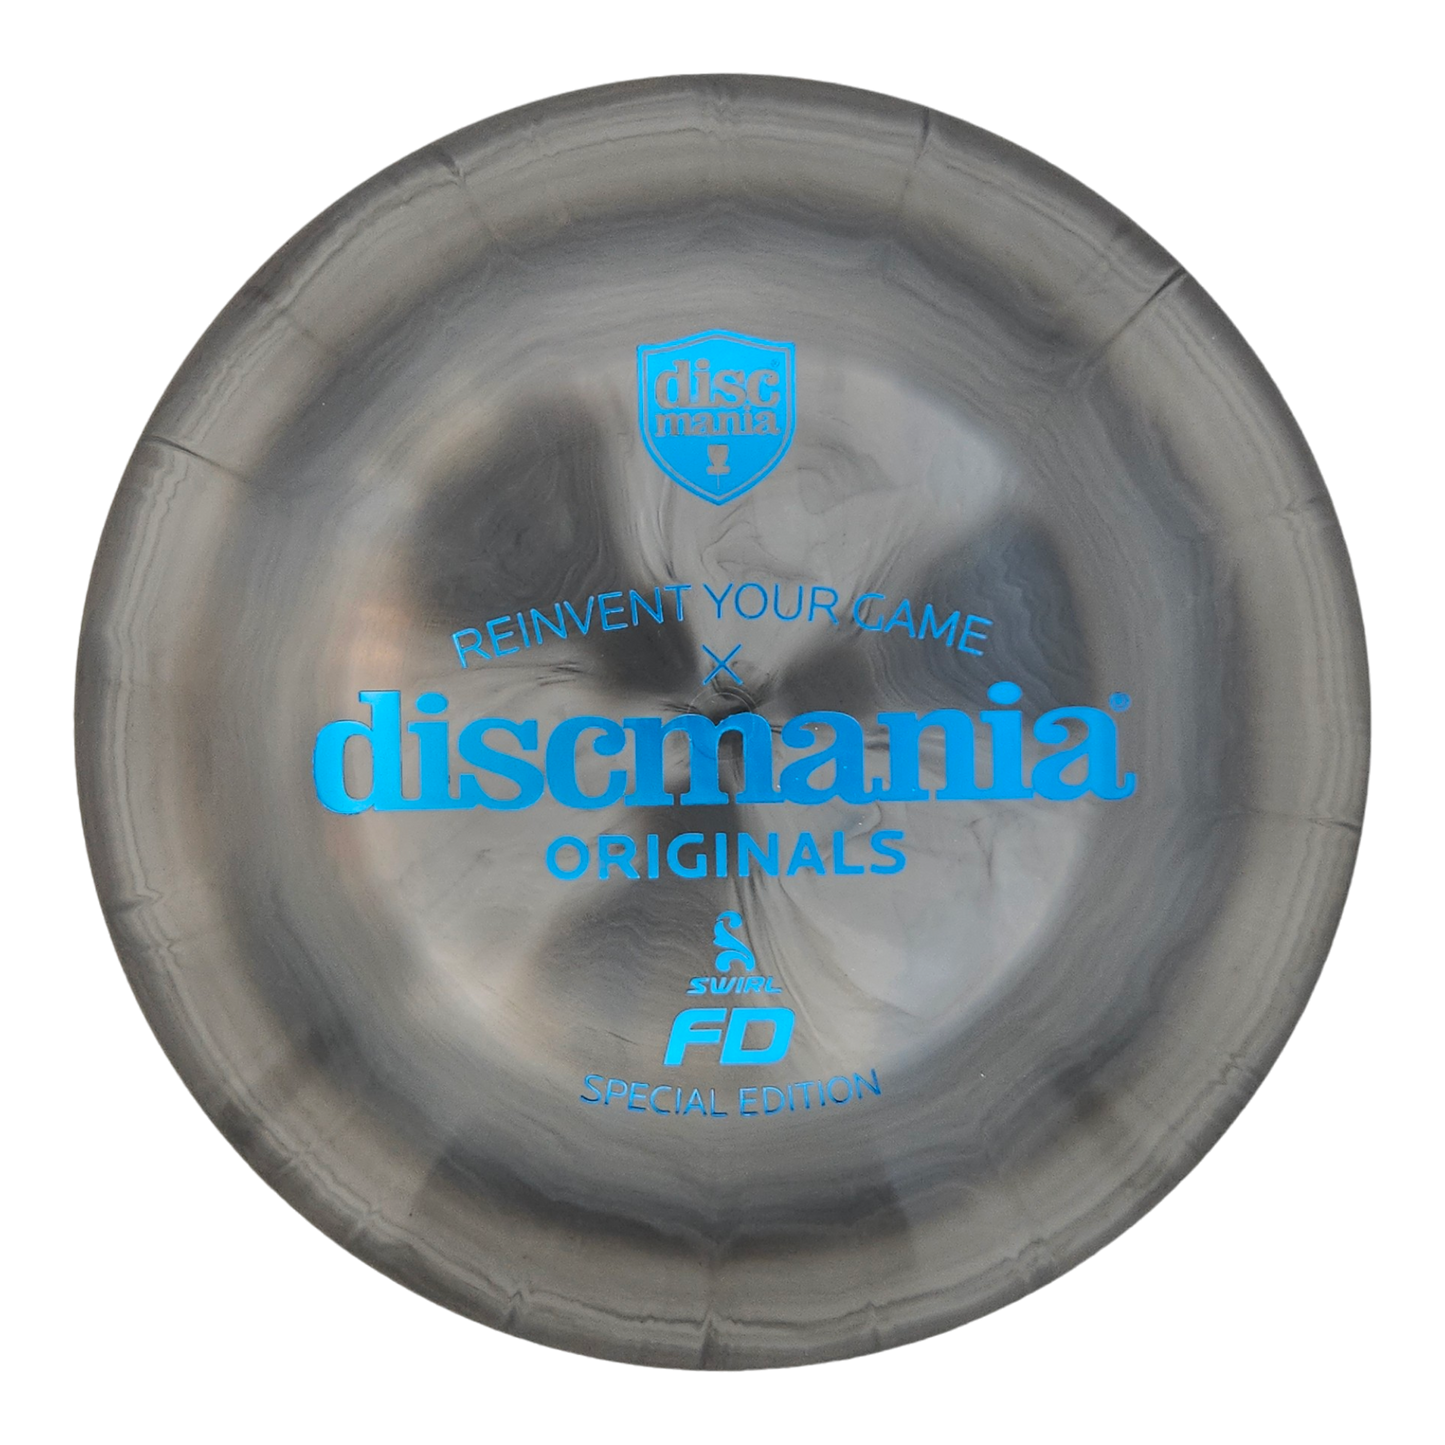 Discmania Swirly S-Line FD (Special Edition)